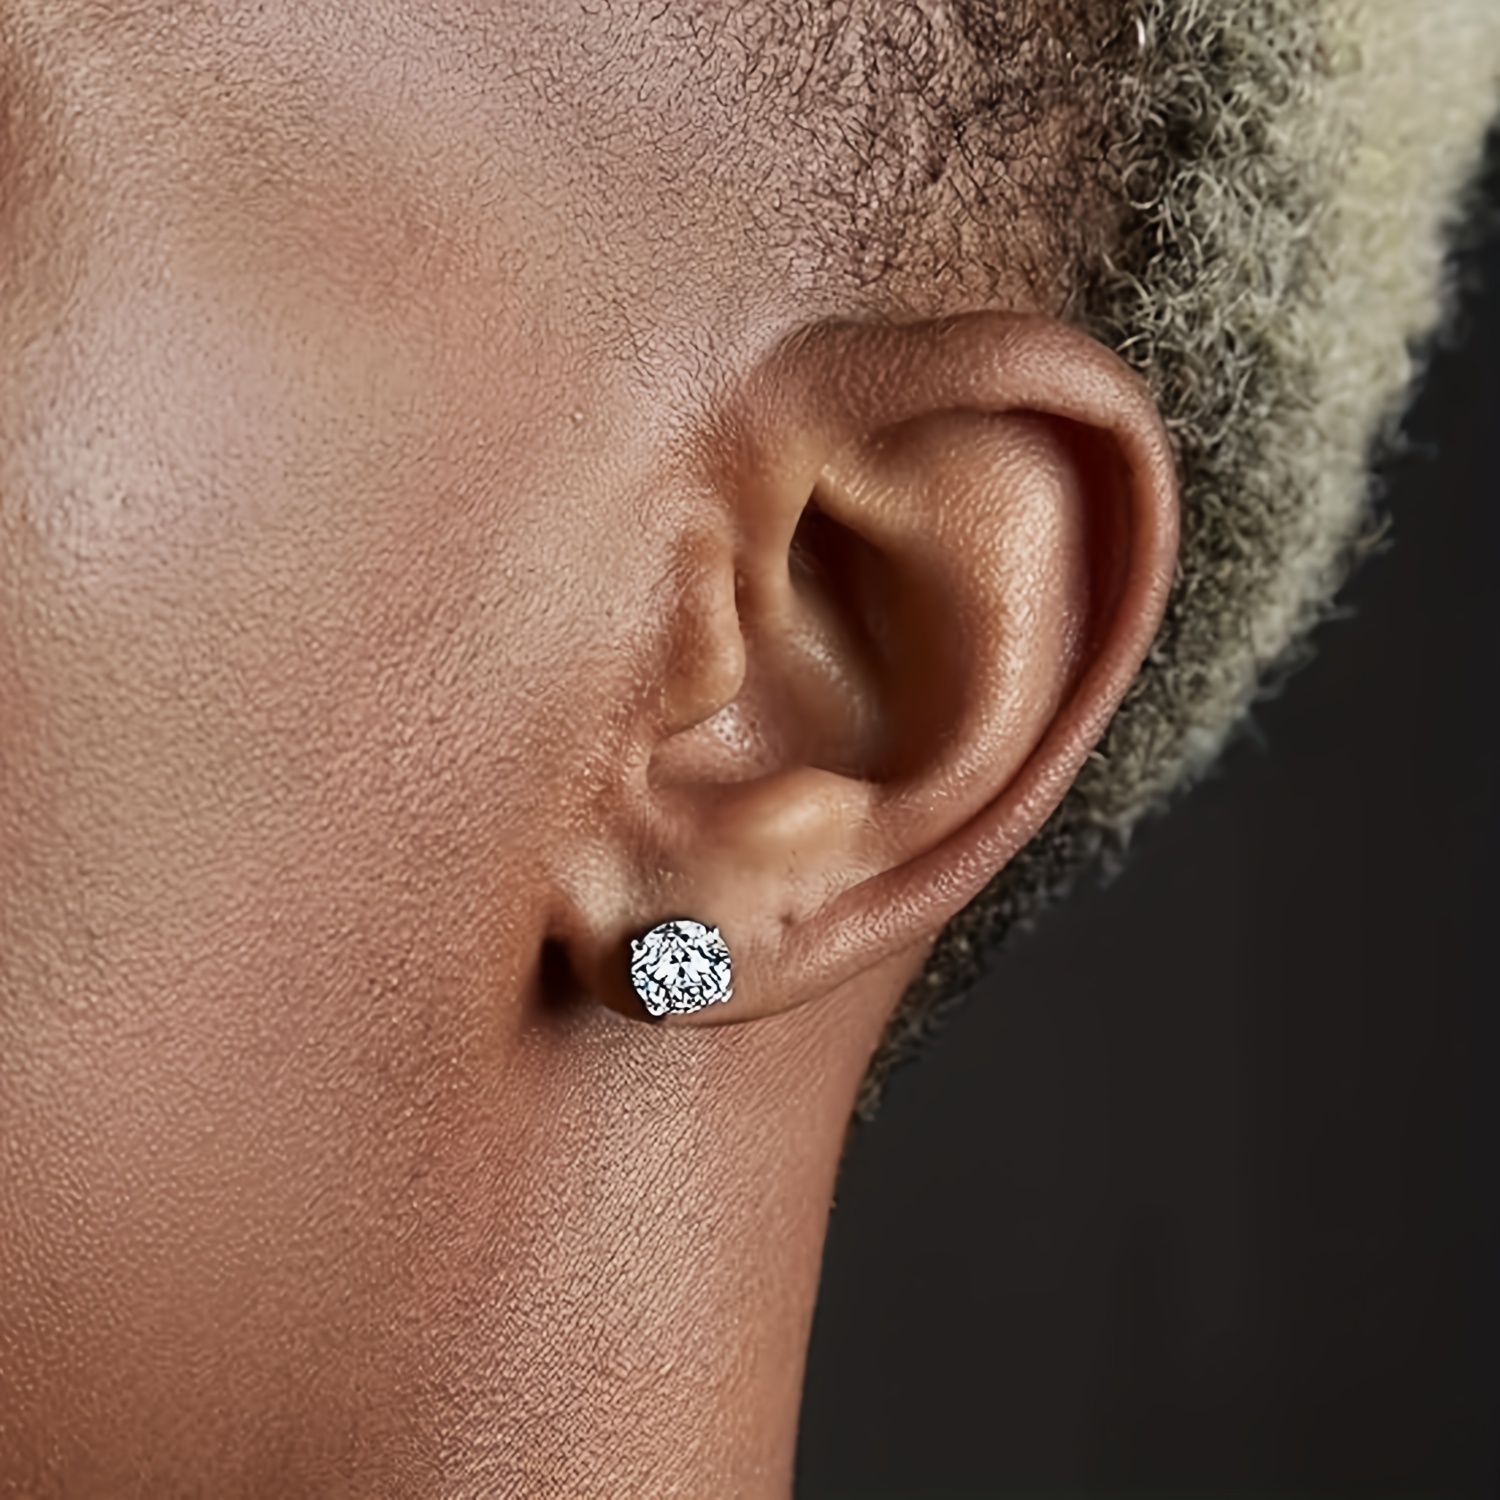  ONESING 12 Pairs Black Magnetic Earrings for Men Clip On  Earrings for Men Fake Earrings Mens Earrings Hoop Dangle Earrings Black  Earrings for Men Women Fake Piercing Non-Piercing Earrings Set: Clothing